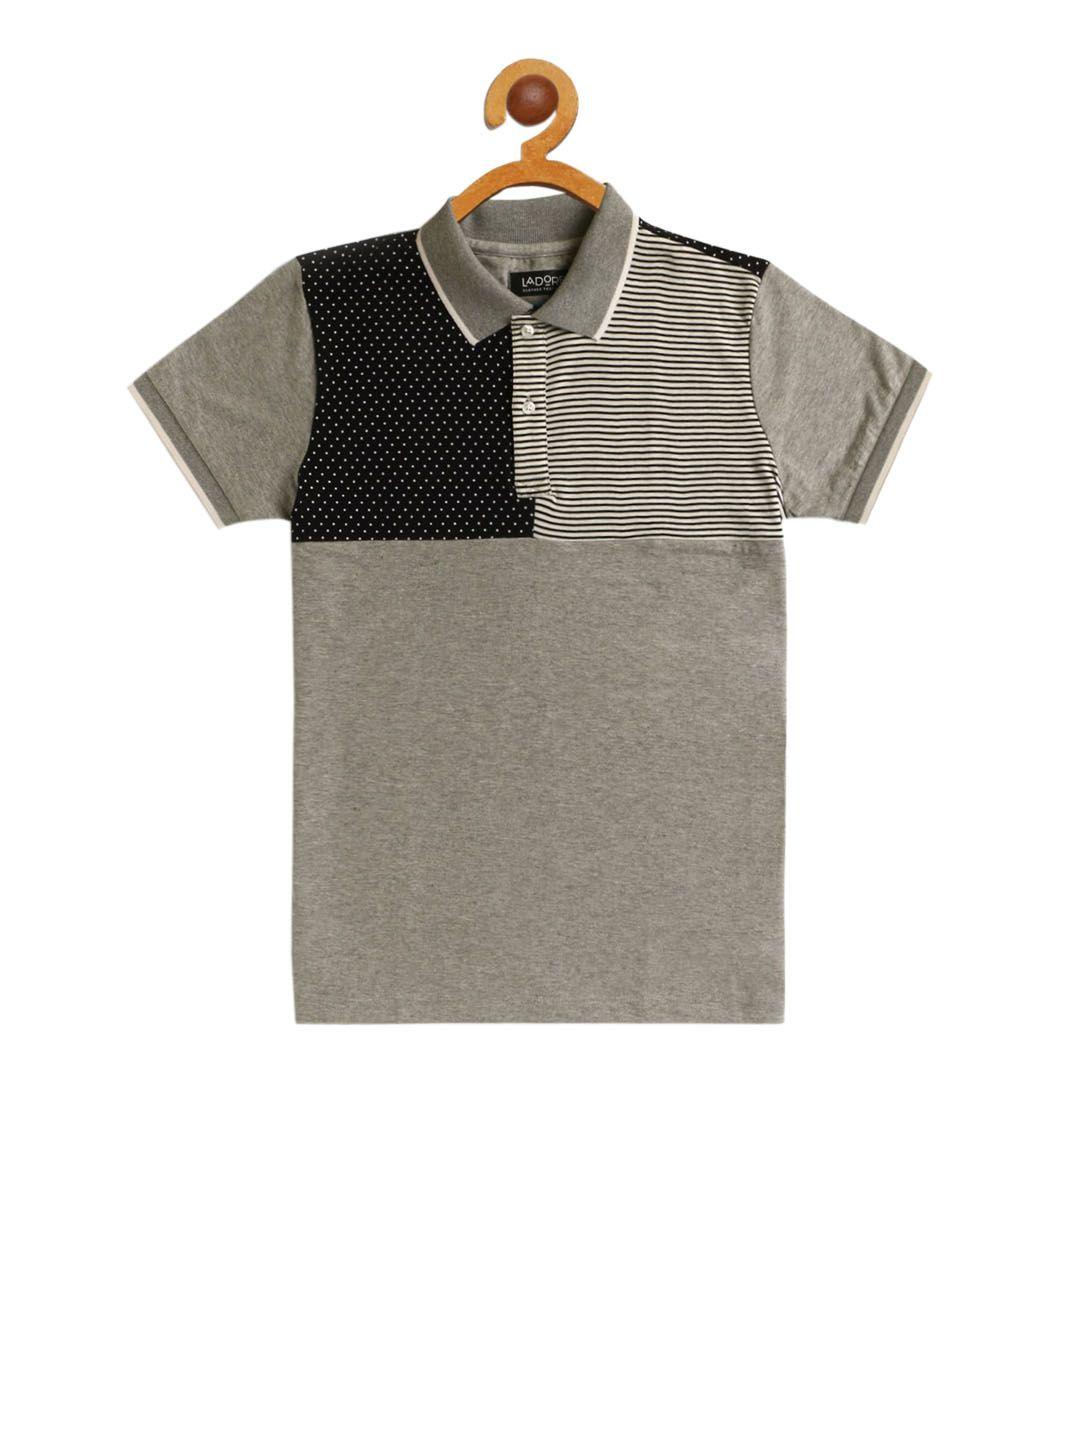 ladore kids grey & white striped polo collar t-shirt